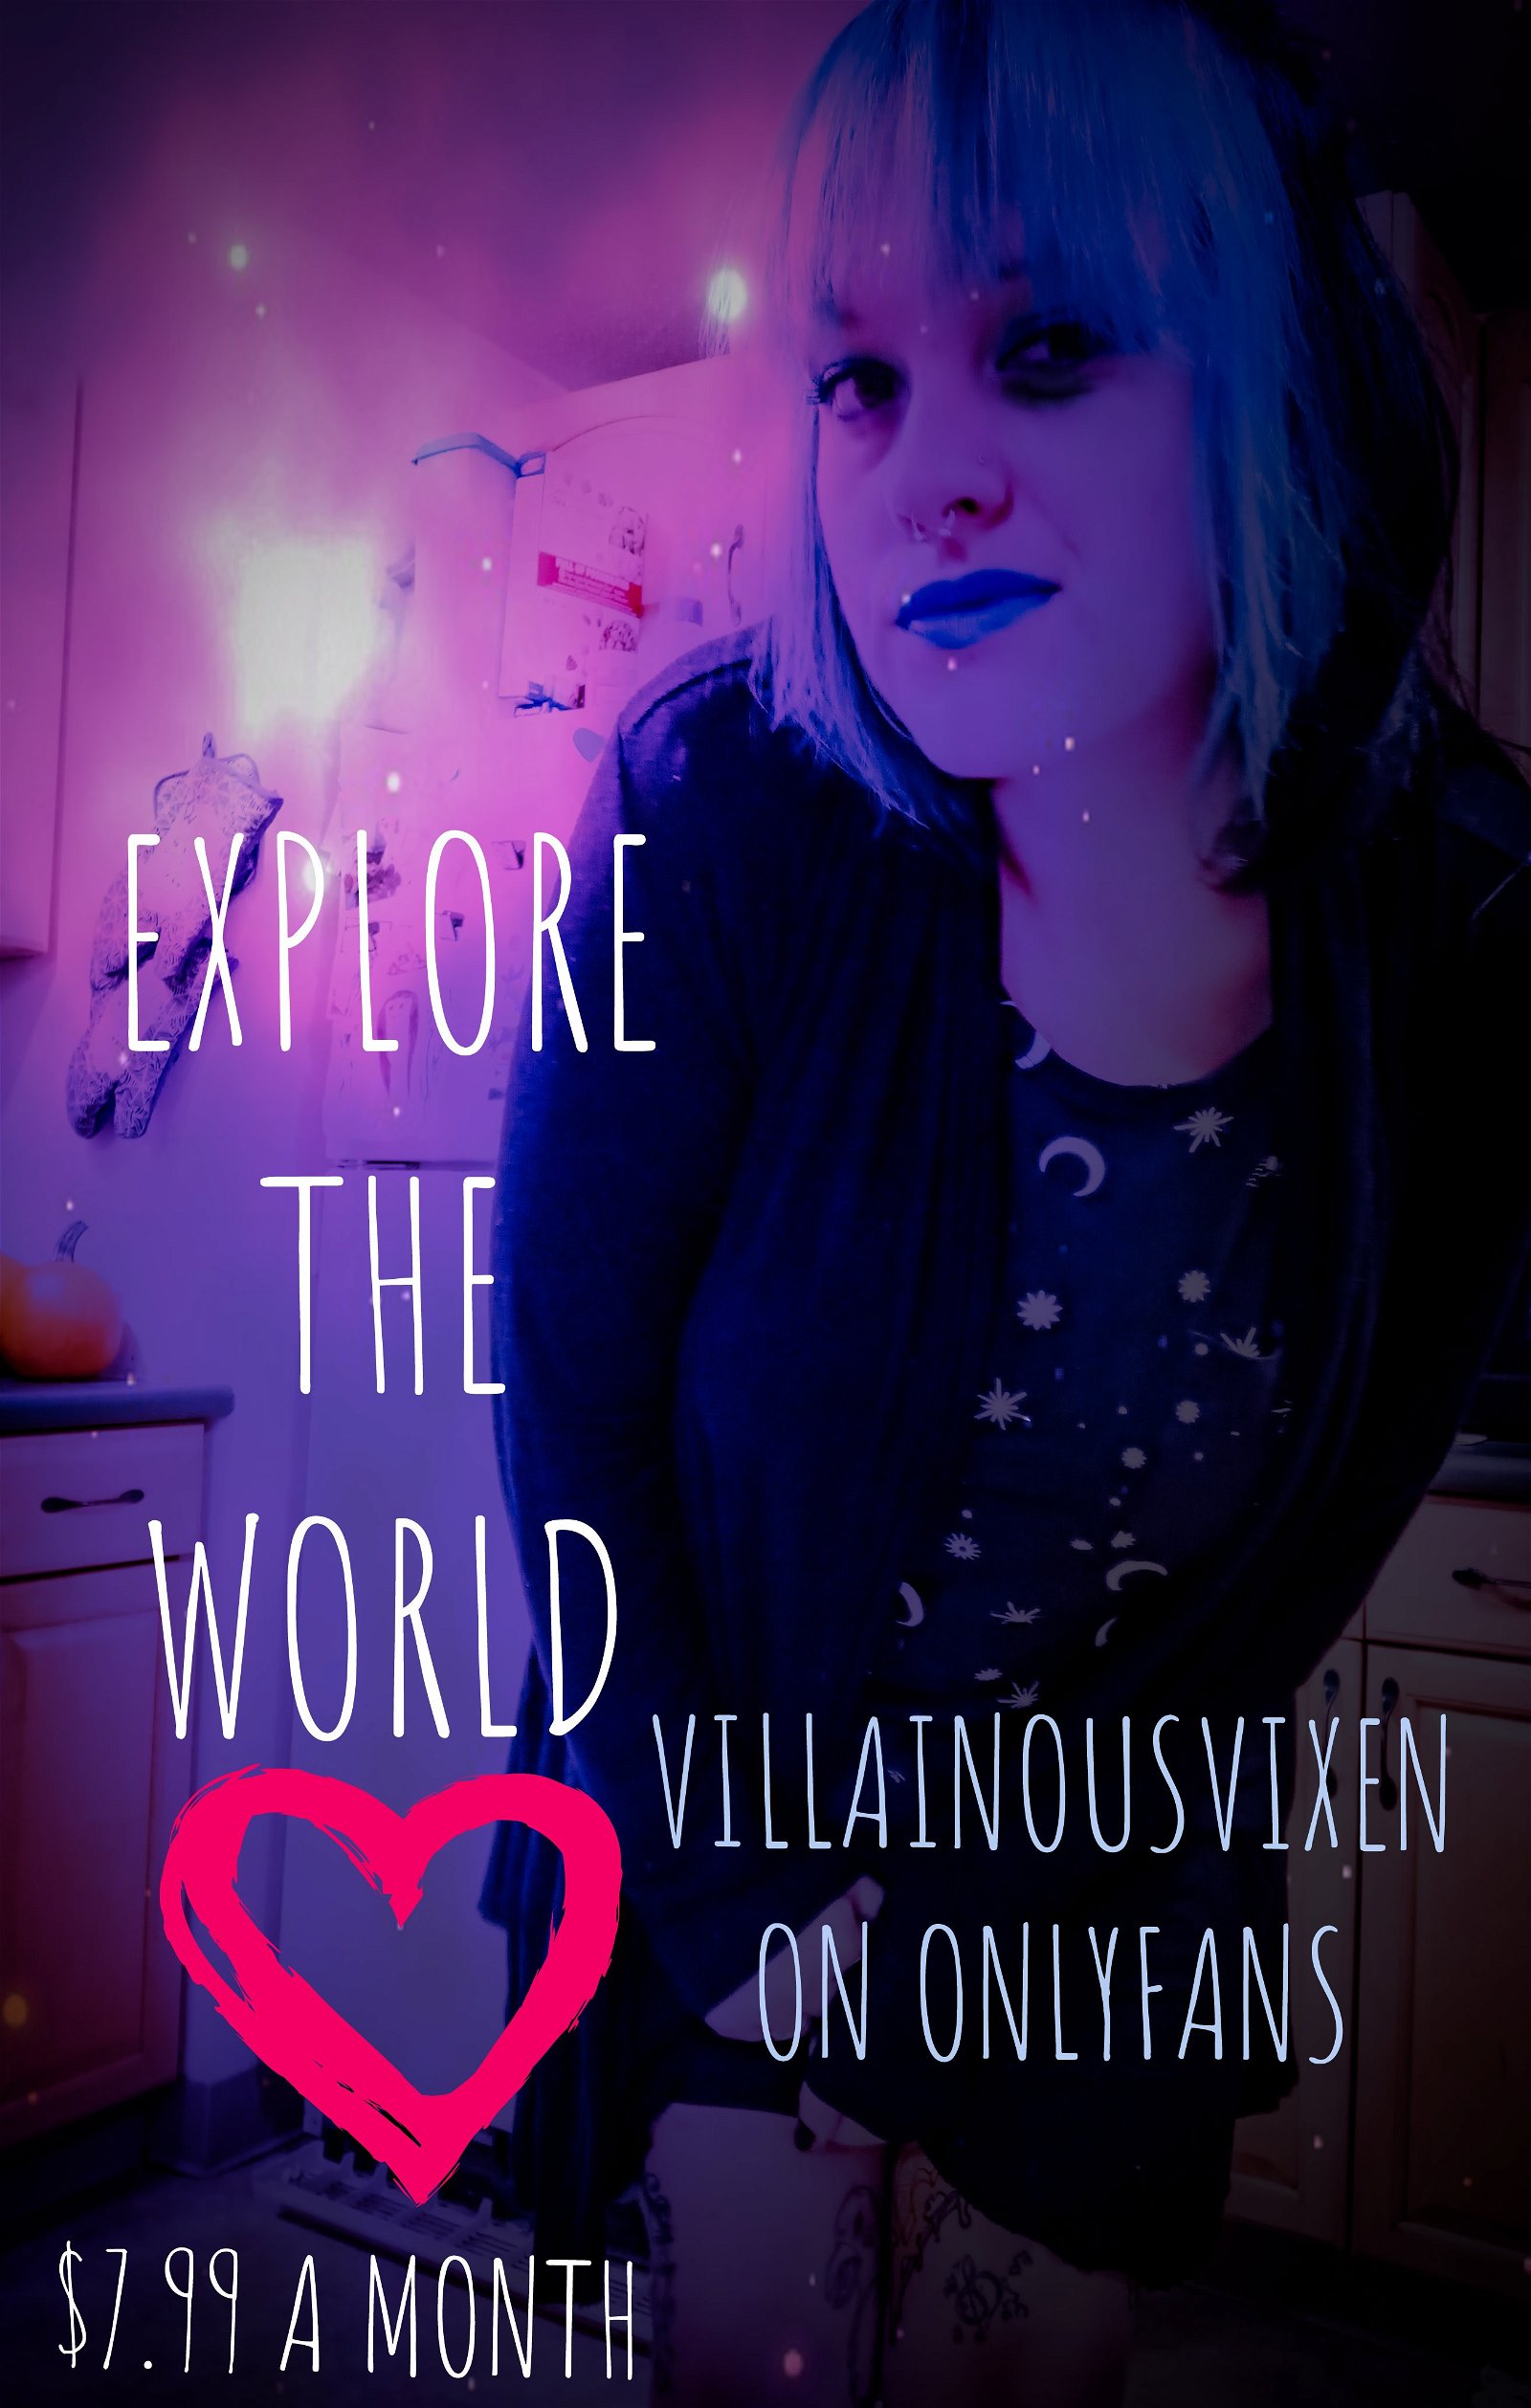 Photo by villainous vixen with the username @villainousvixen, who is a star user,  October 1, 2020 at 5:46 AM